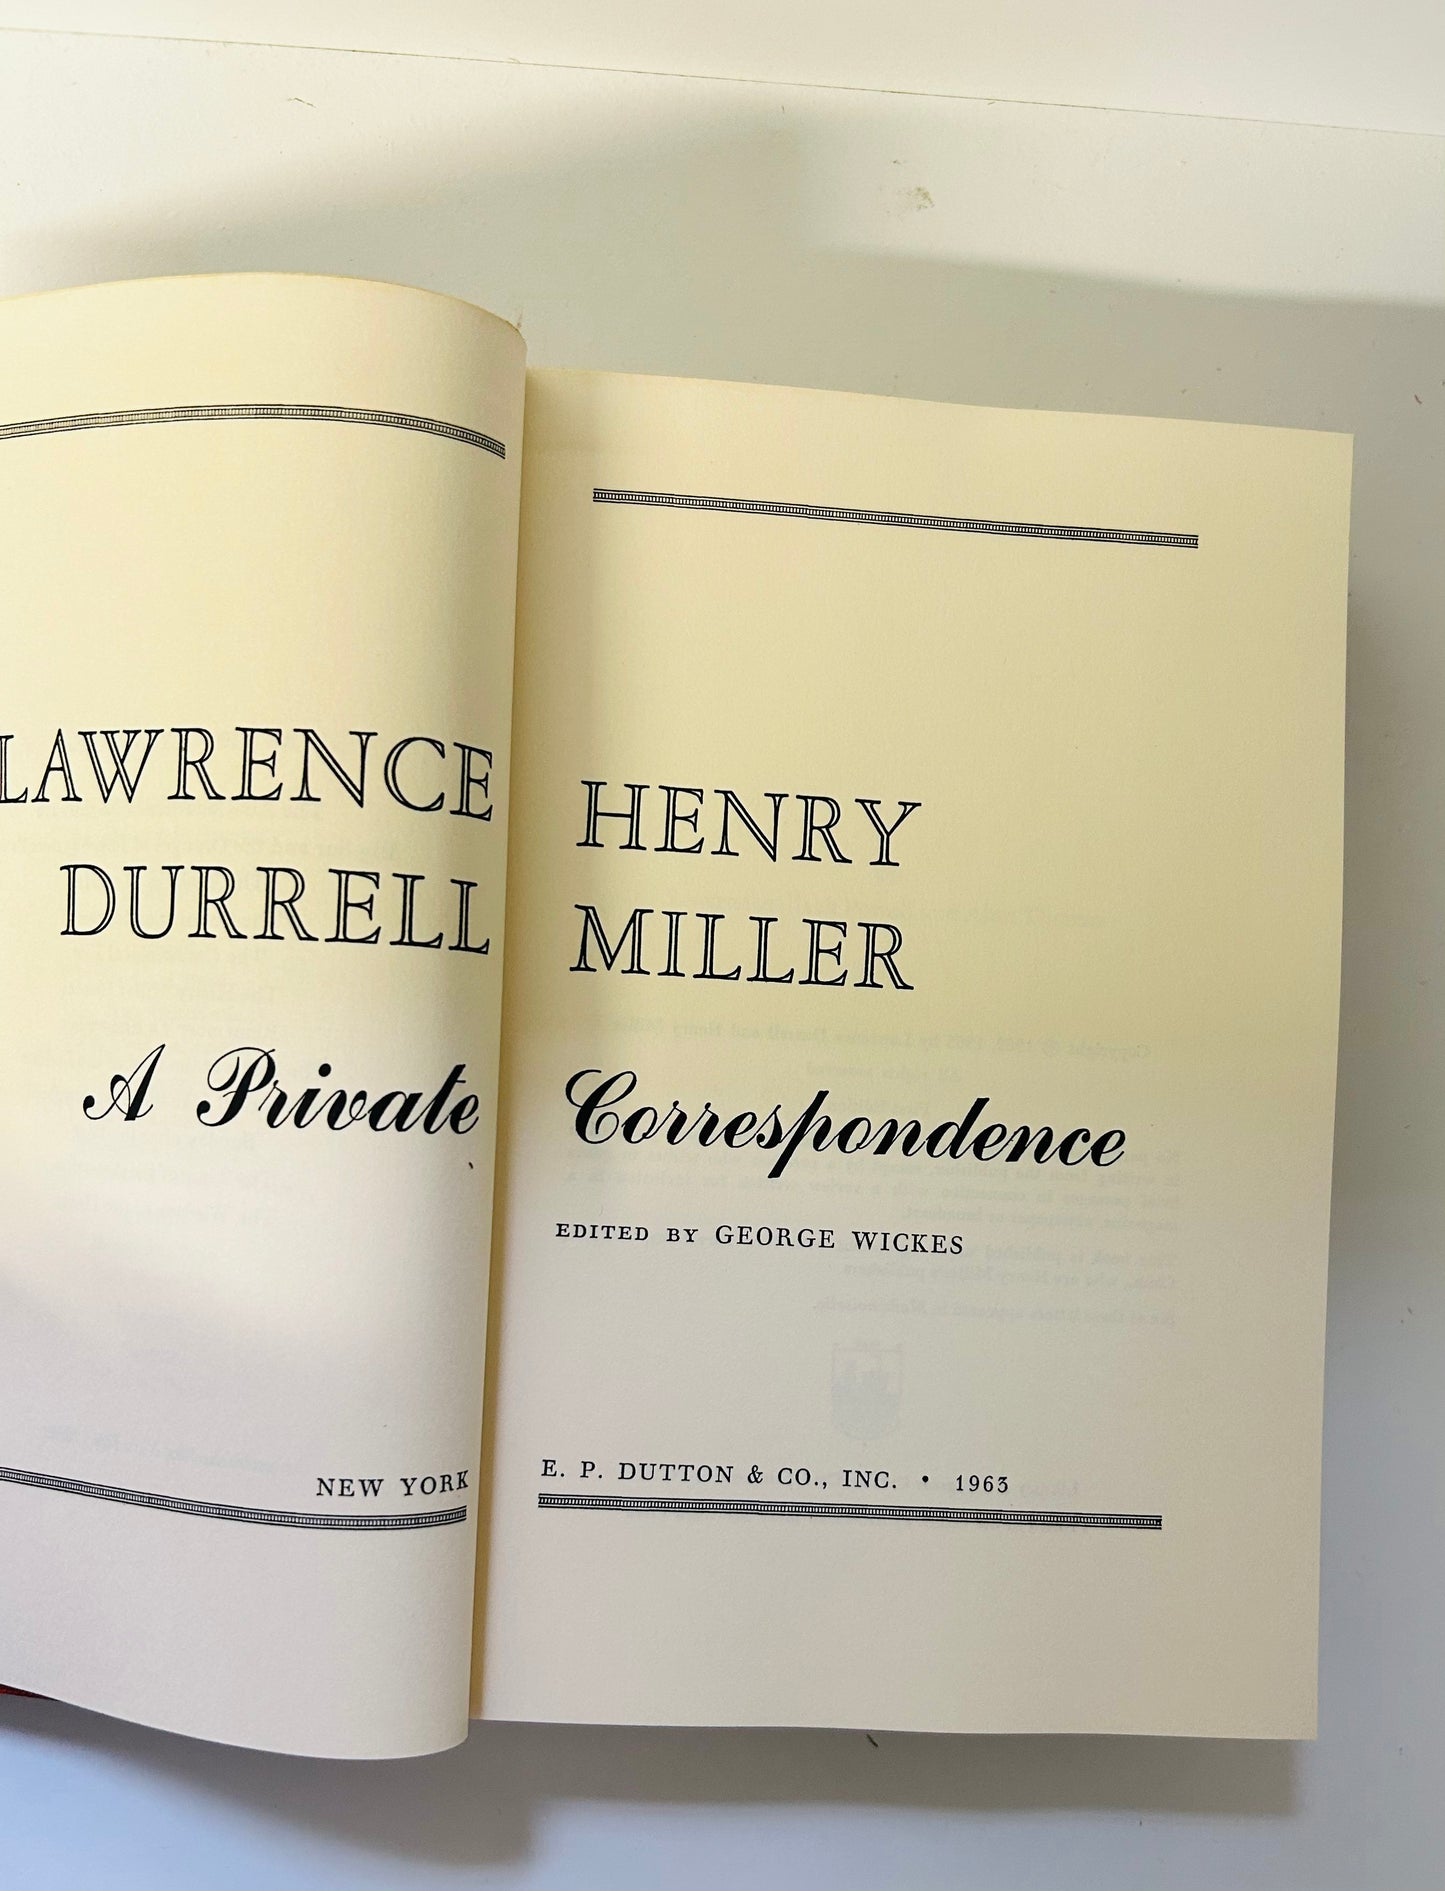 Lawrence Durrell & Henry Miller